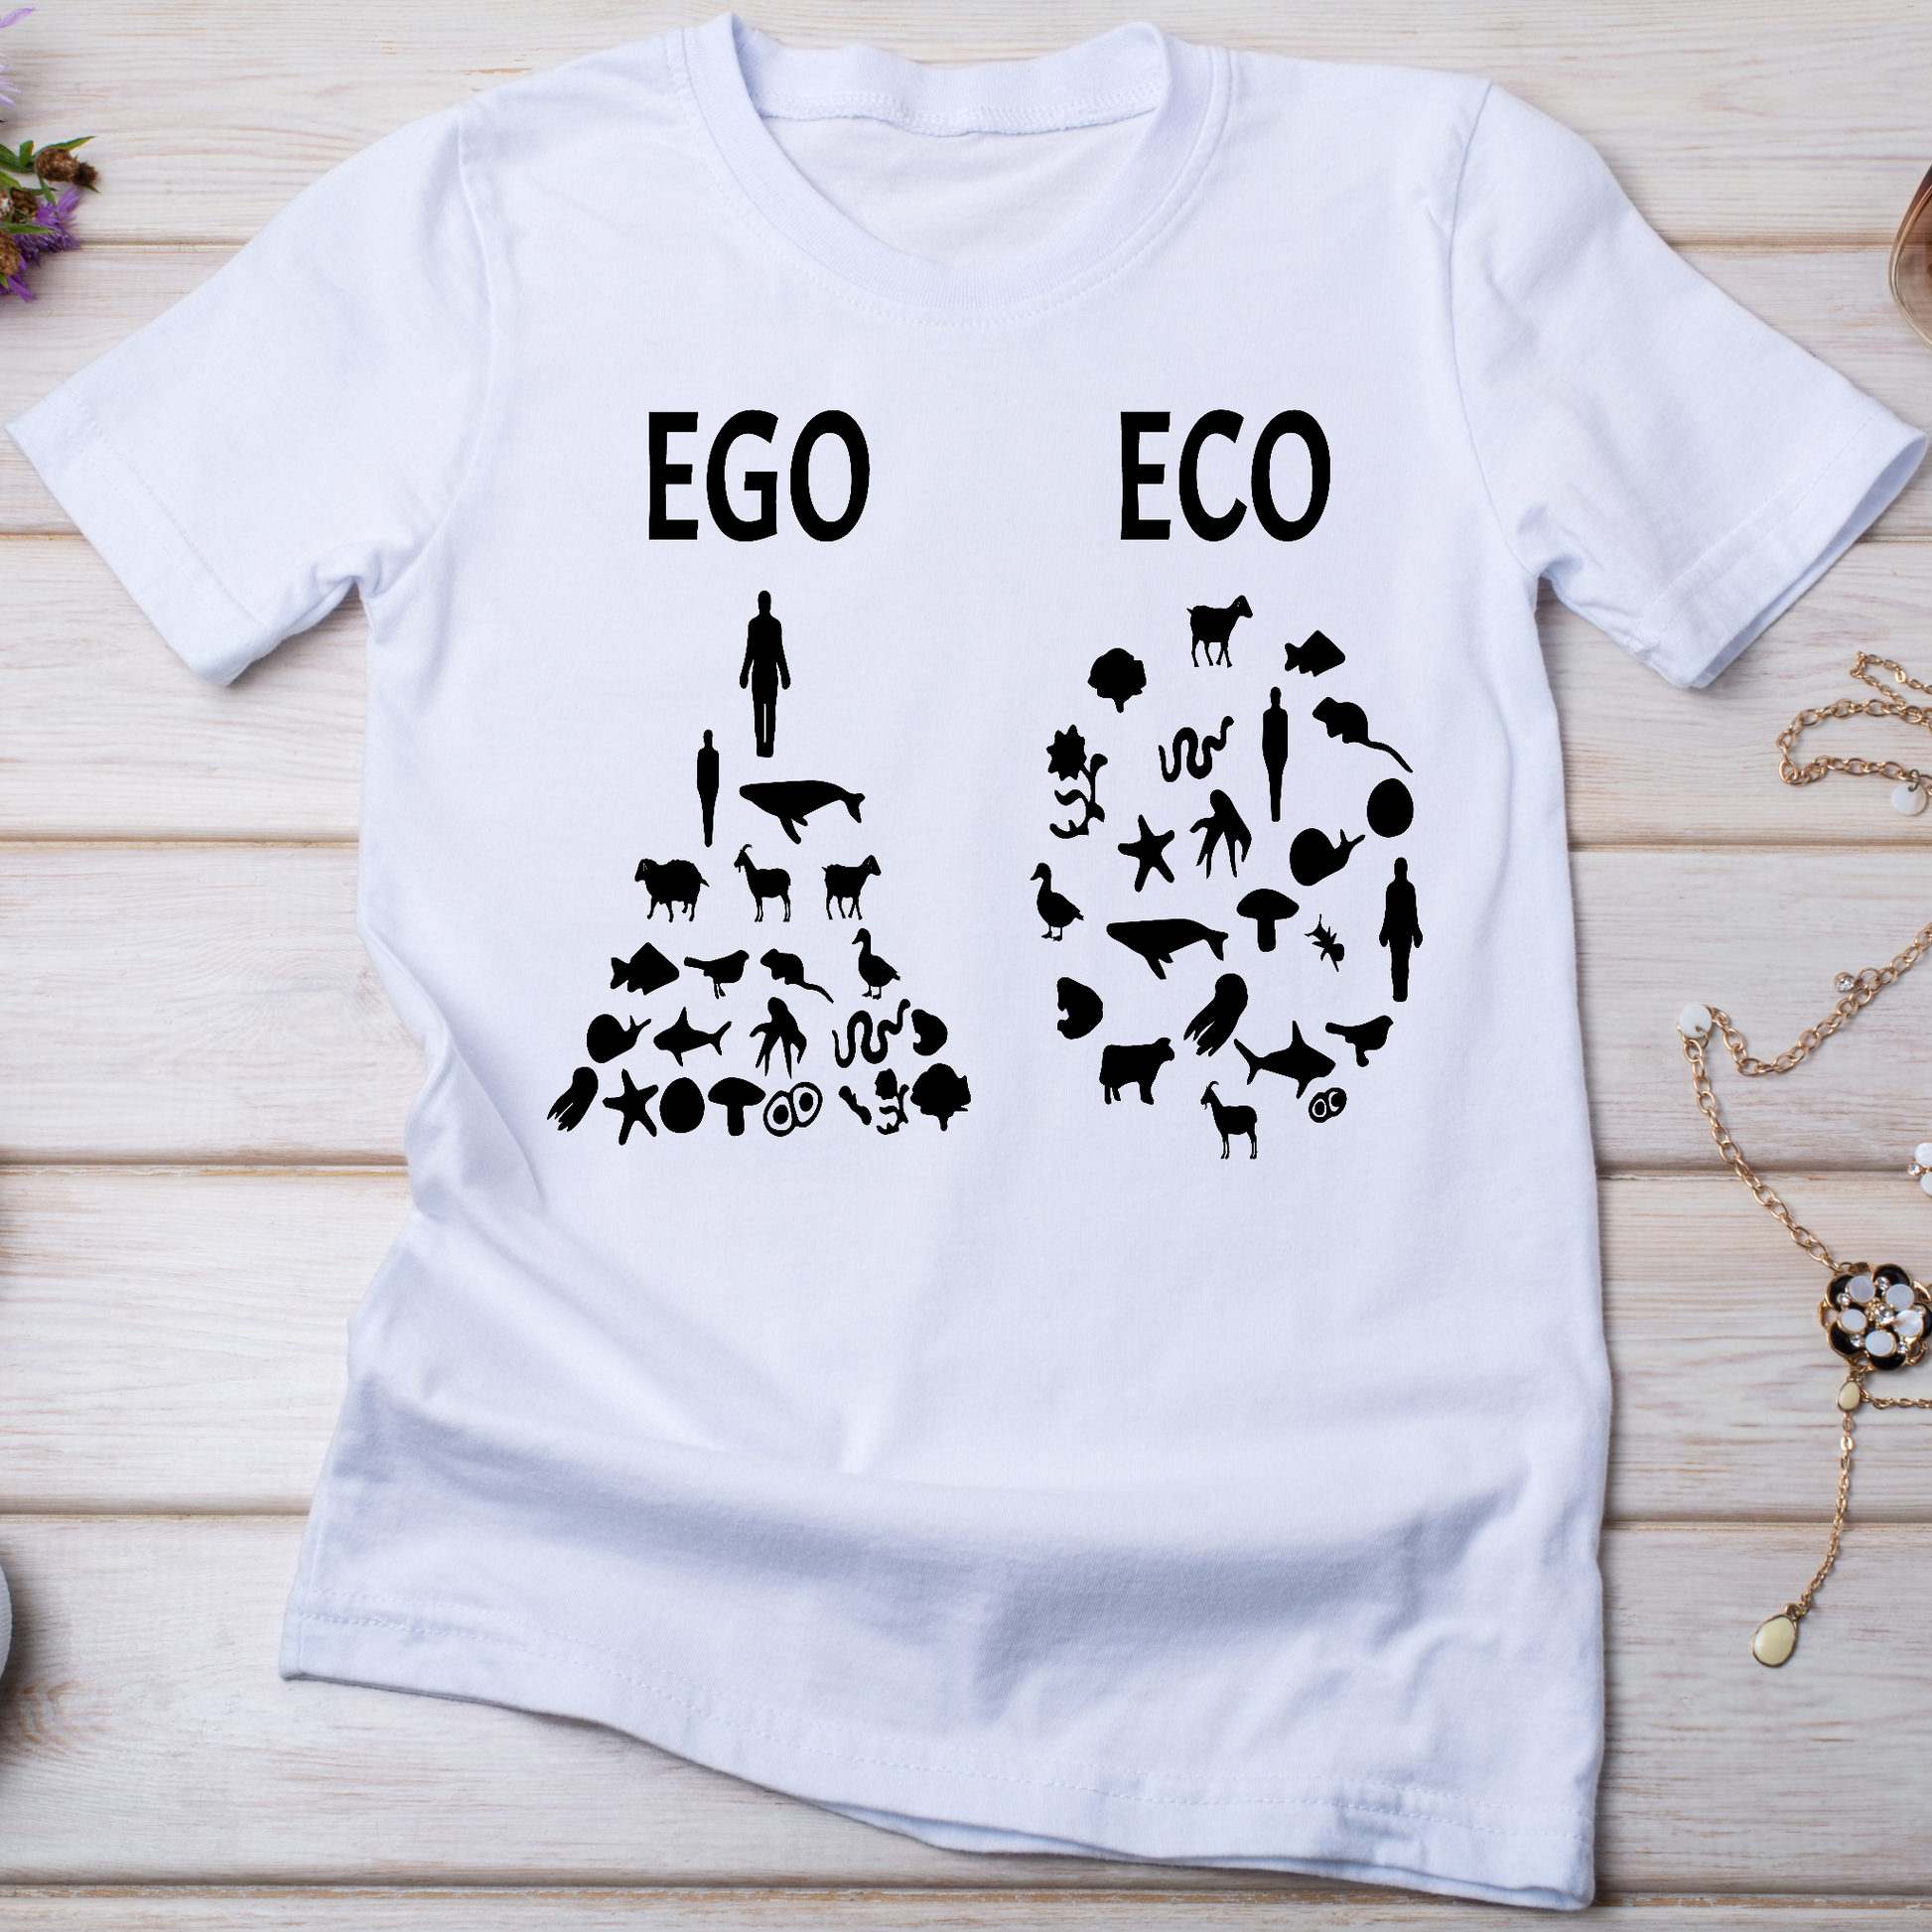 Ego vs eco Women's vegan t-shirt - Premium t-shirt from Lees Krazy Teez - Just $19.95! Shop now at Lees Krazy Teez